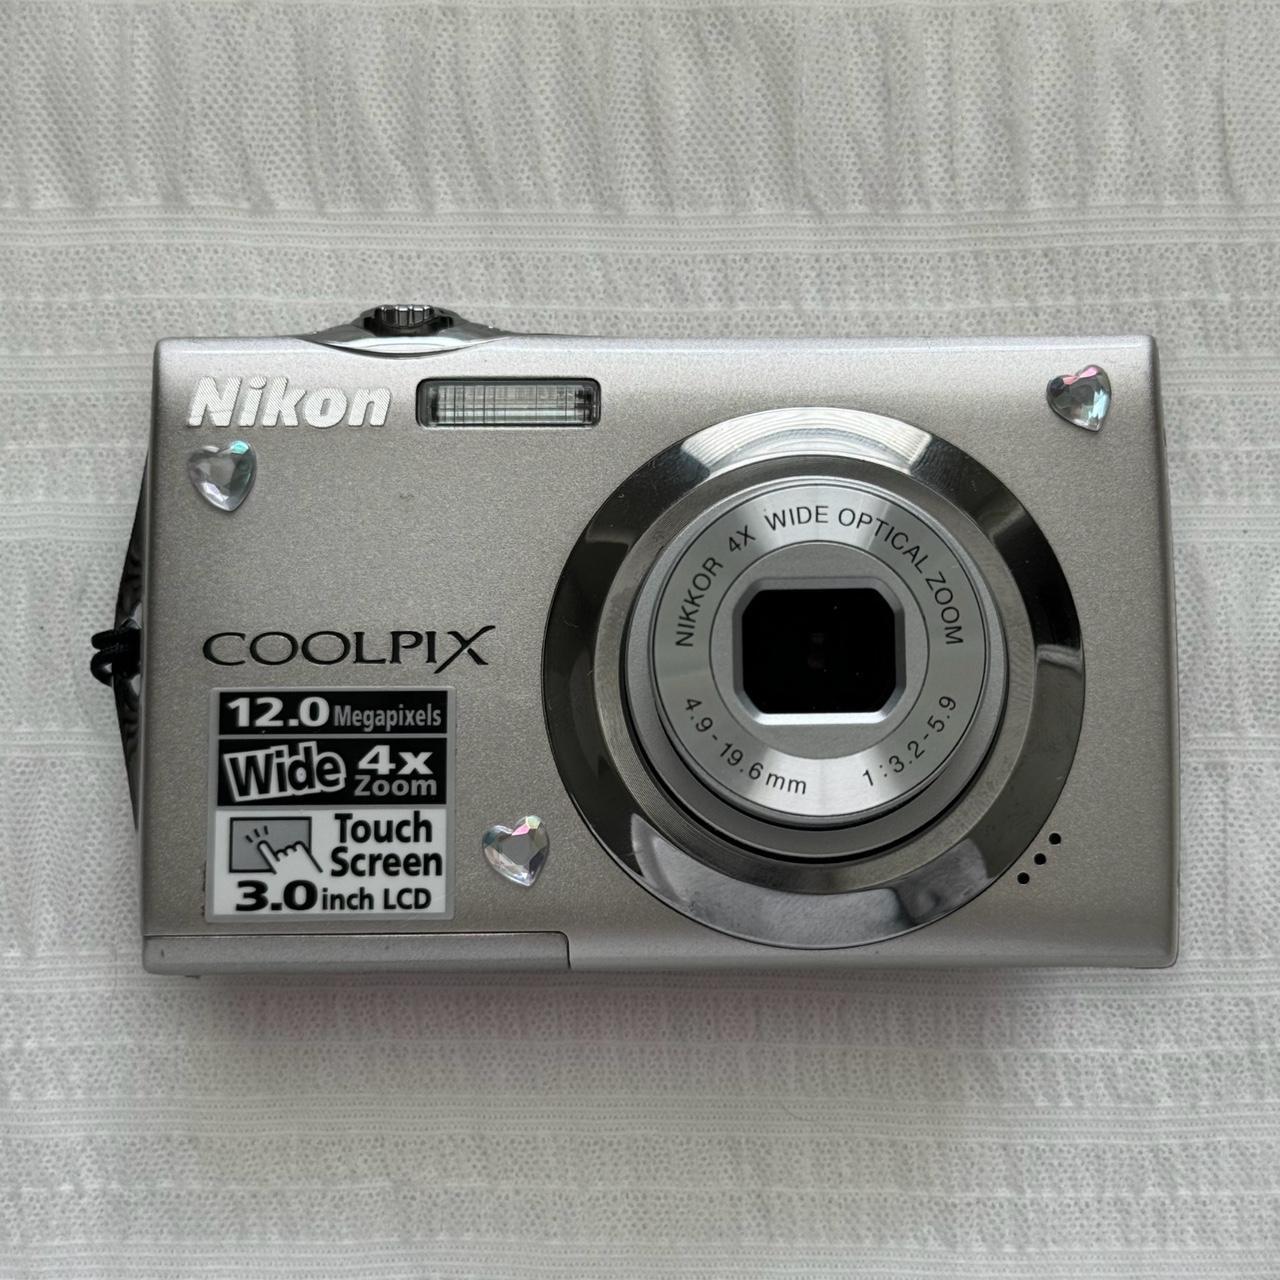 Nikon Coolpix S4000 Review